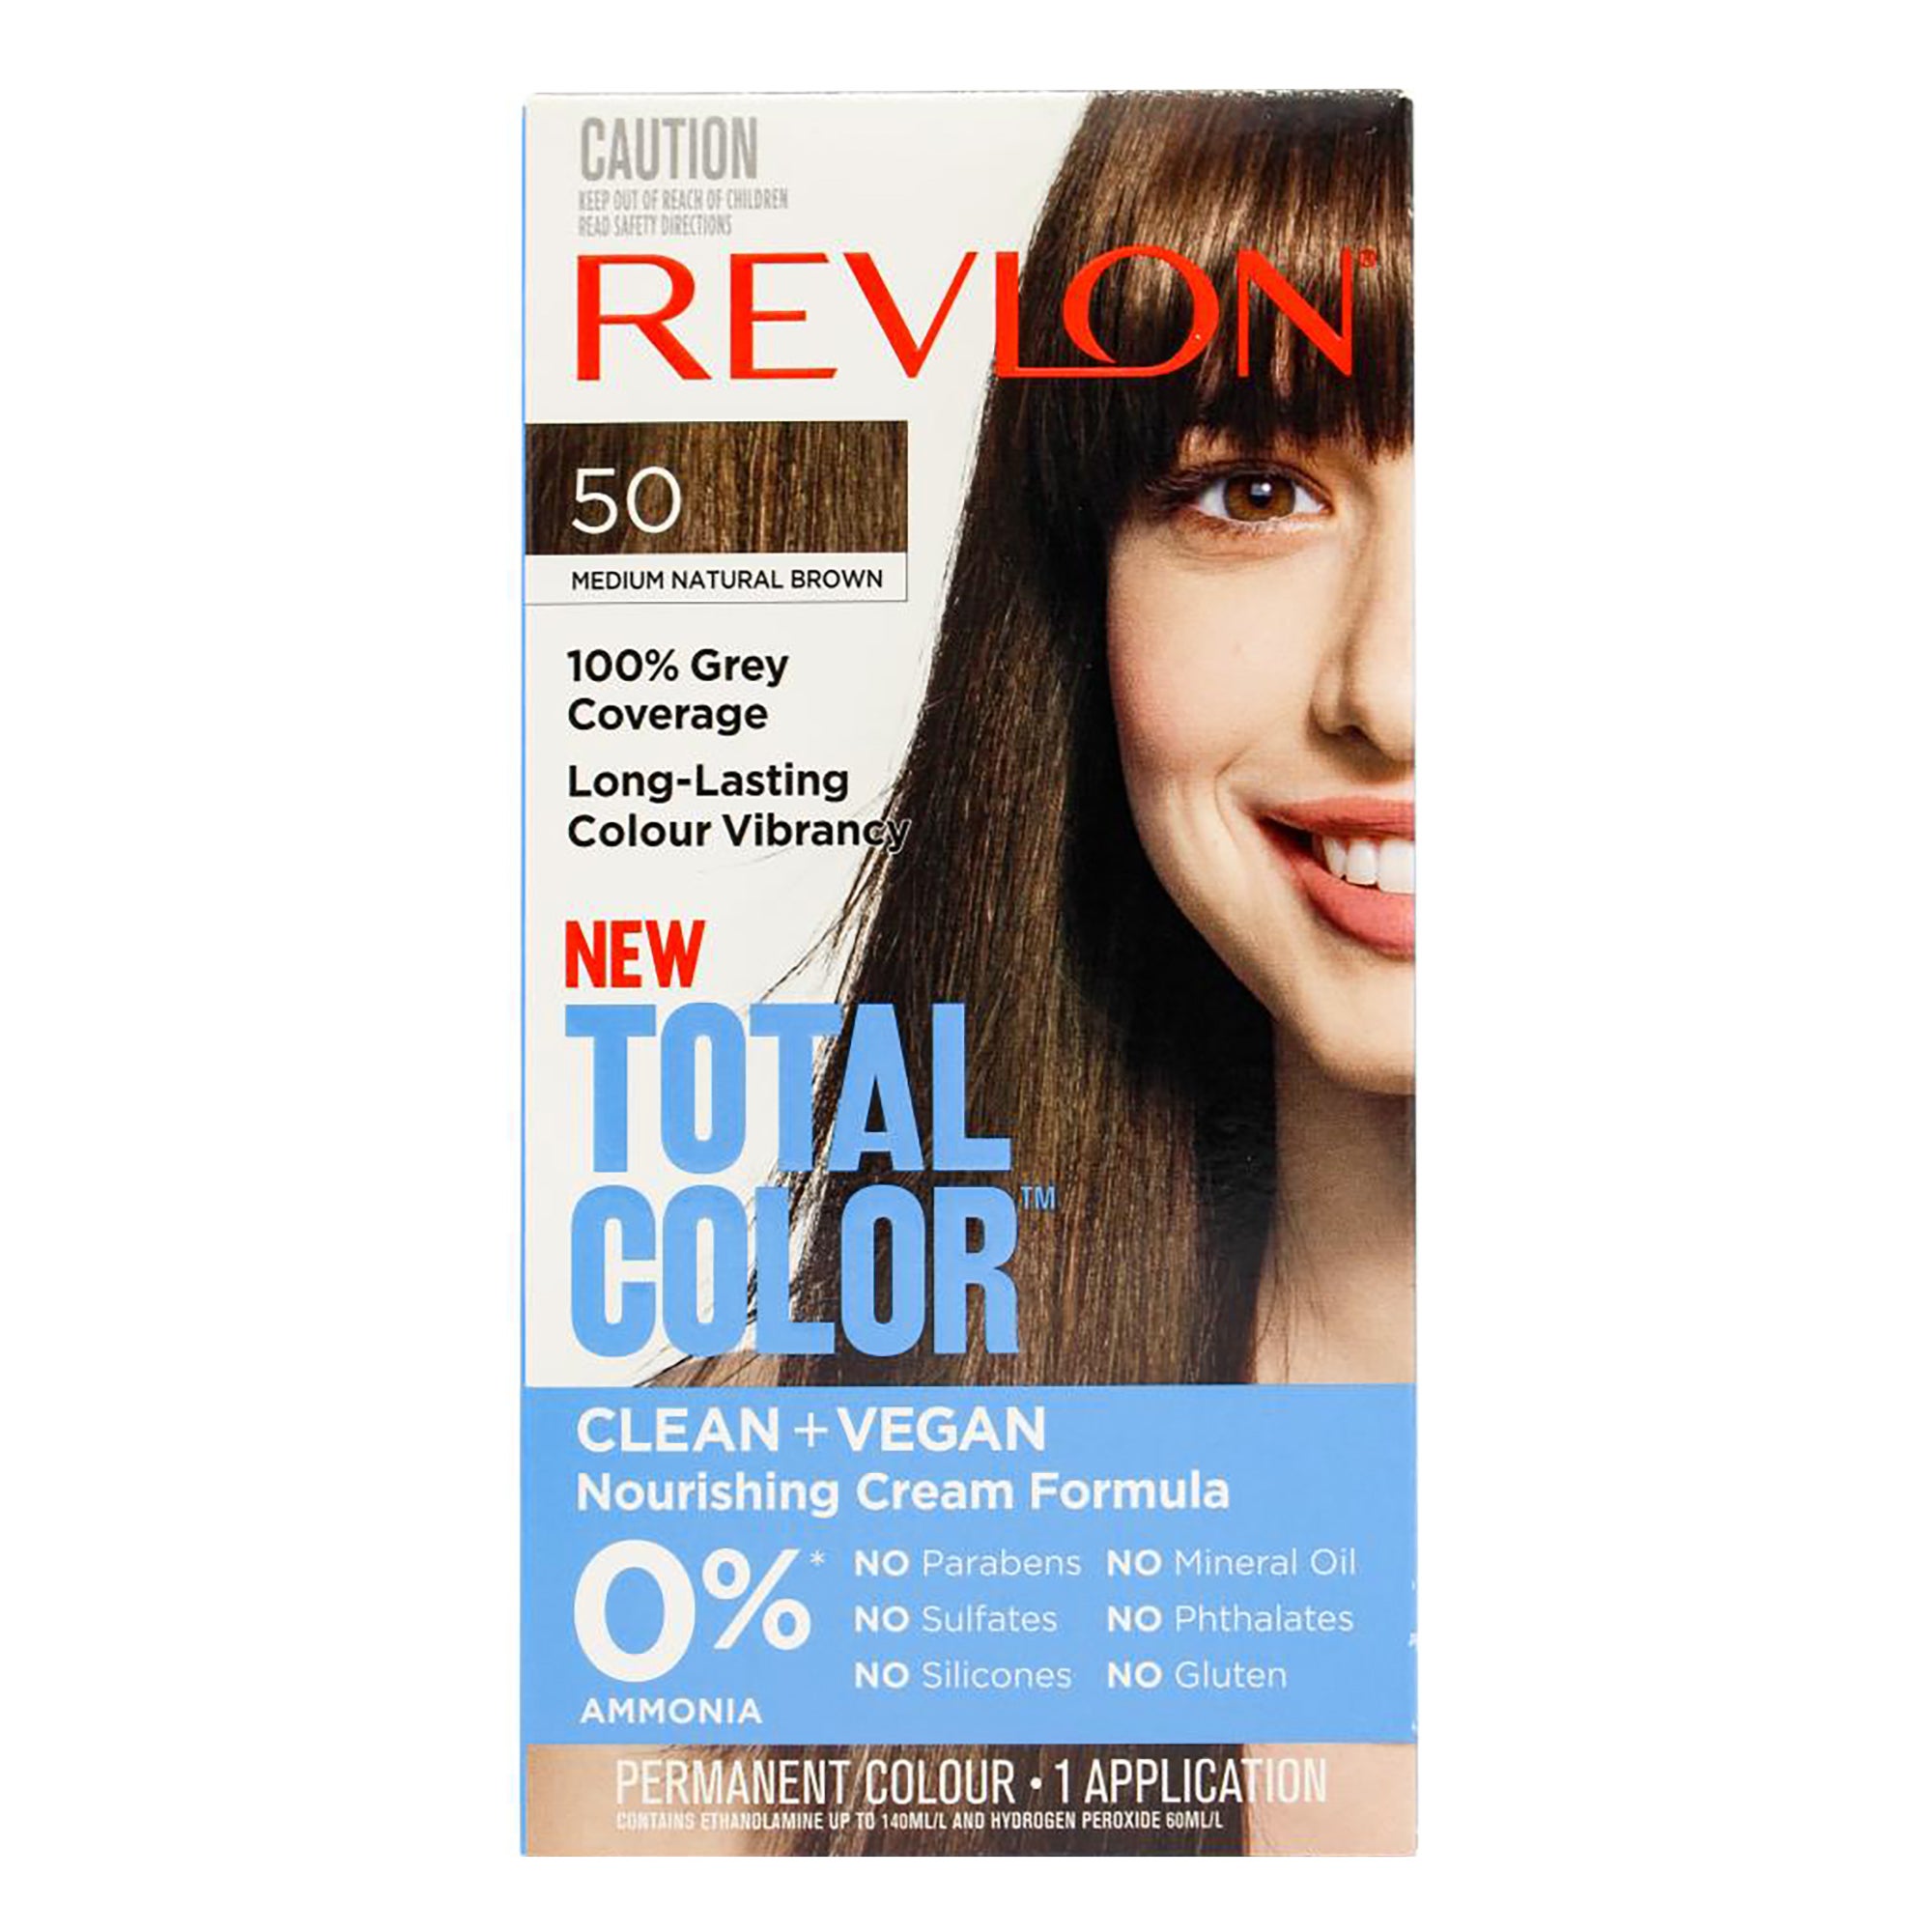 Revlon Total Color Permanent Colour Medium Natural Brown 50 | Hair Care |  Product